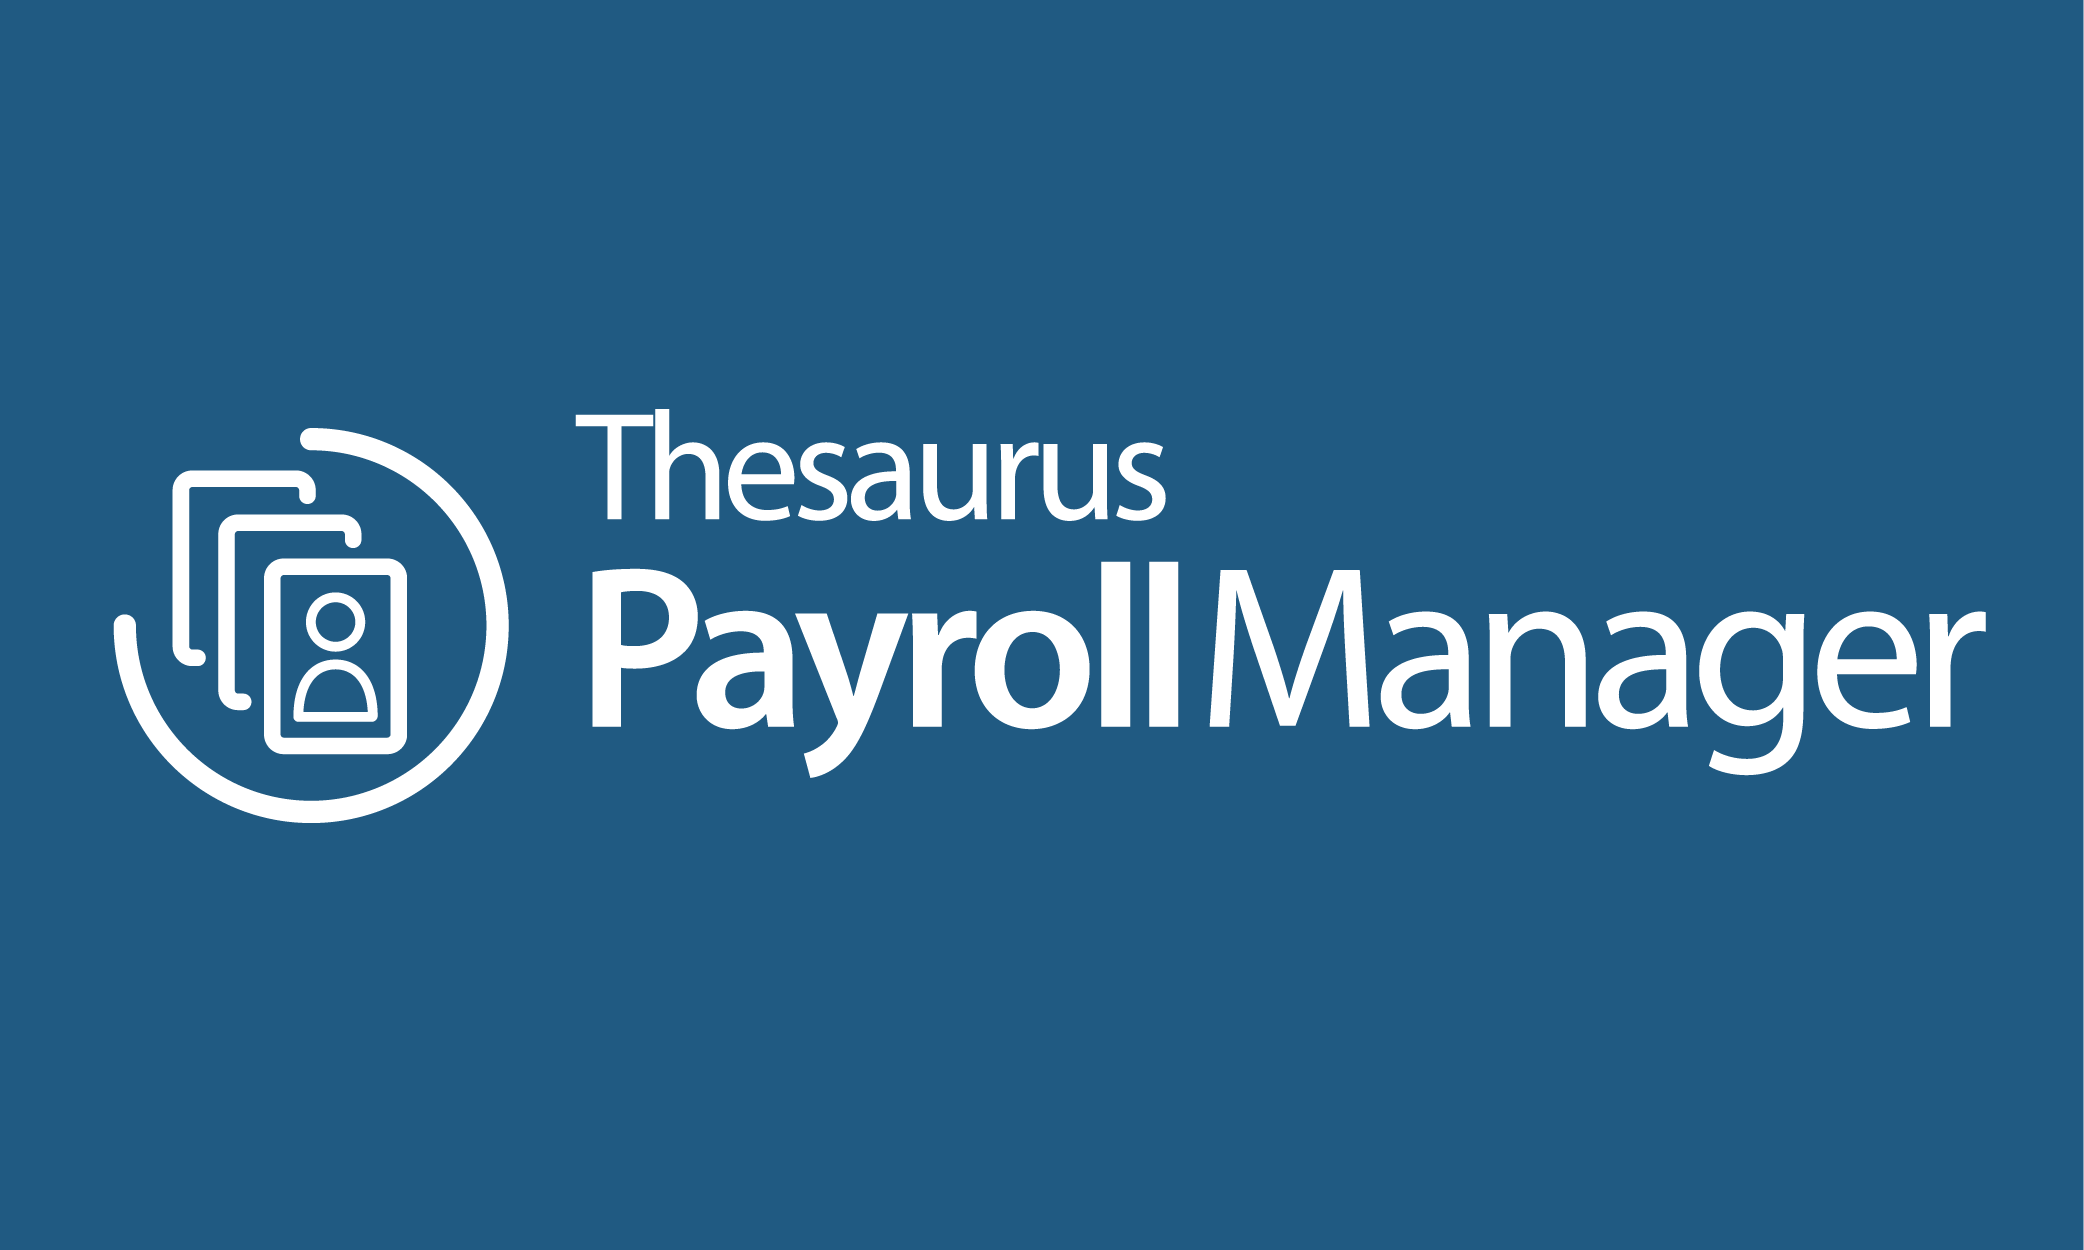 Thesaurus Payroll Manager